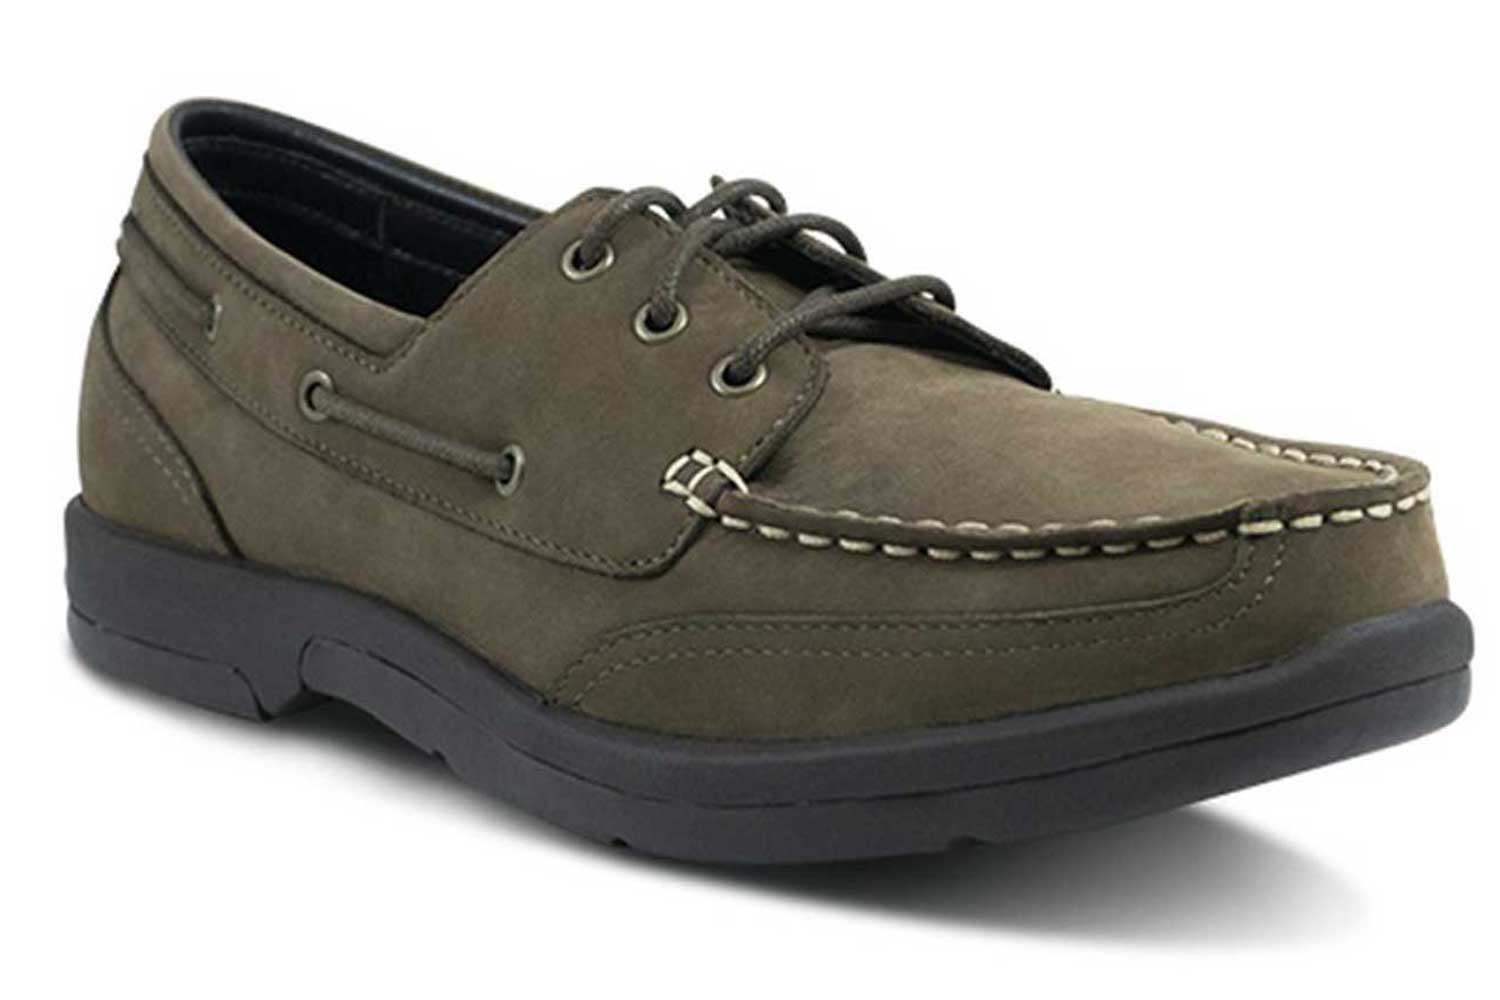 Apex Shoes LT810M Men's Boat Shoe - Comfort Orthopedic Diabetic Shoe - Extra Depth For Orthotics - Extra Wide